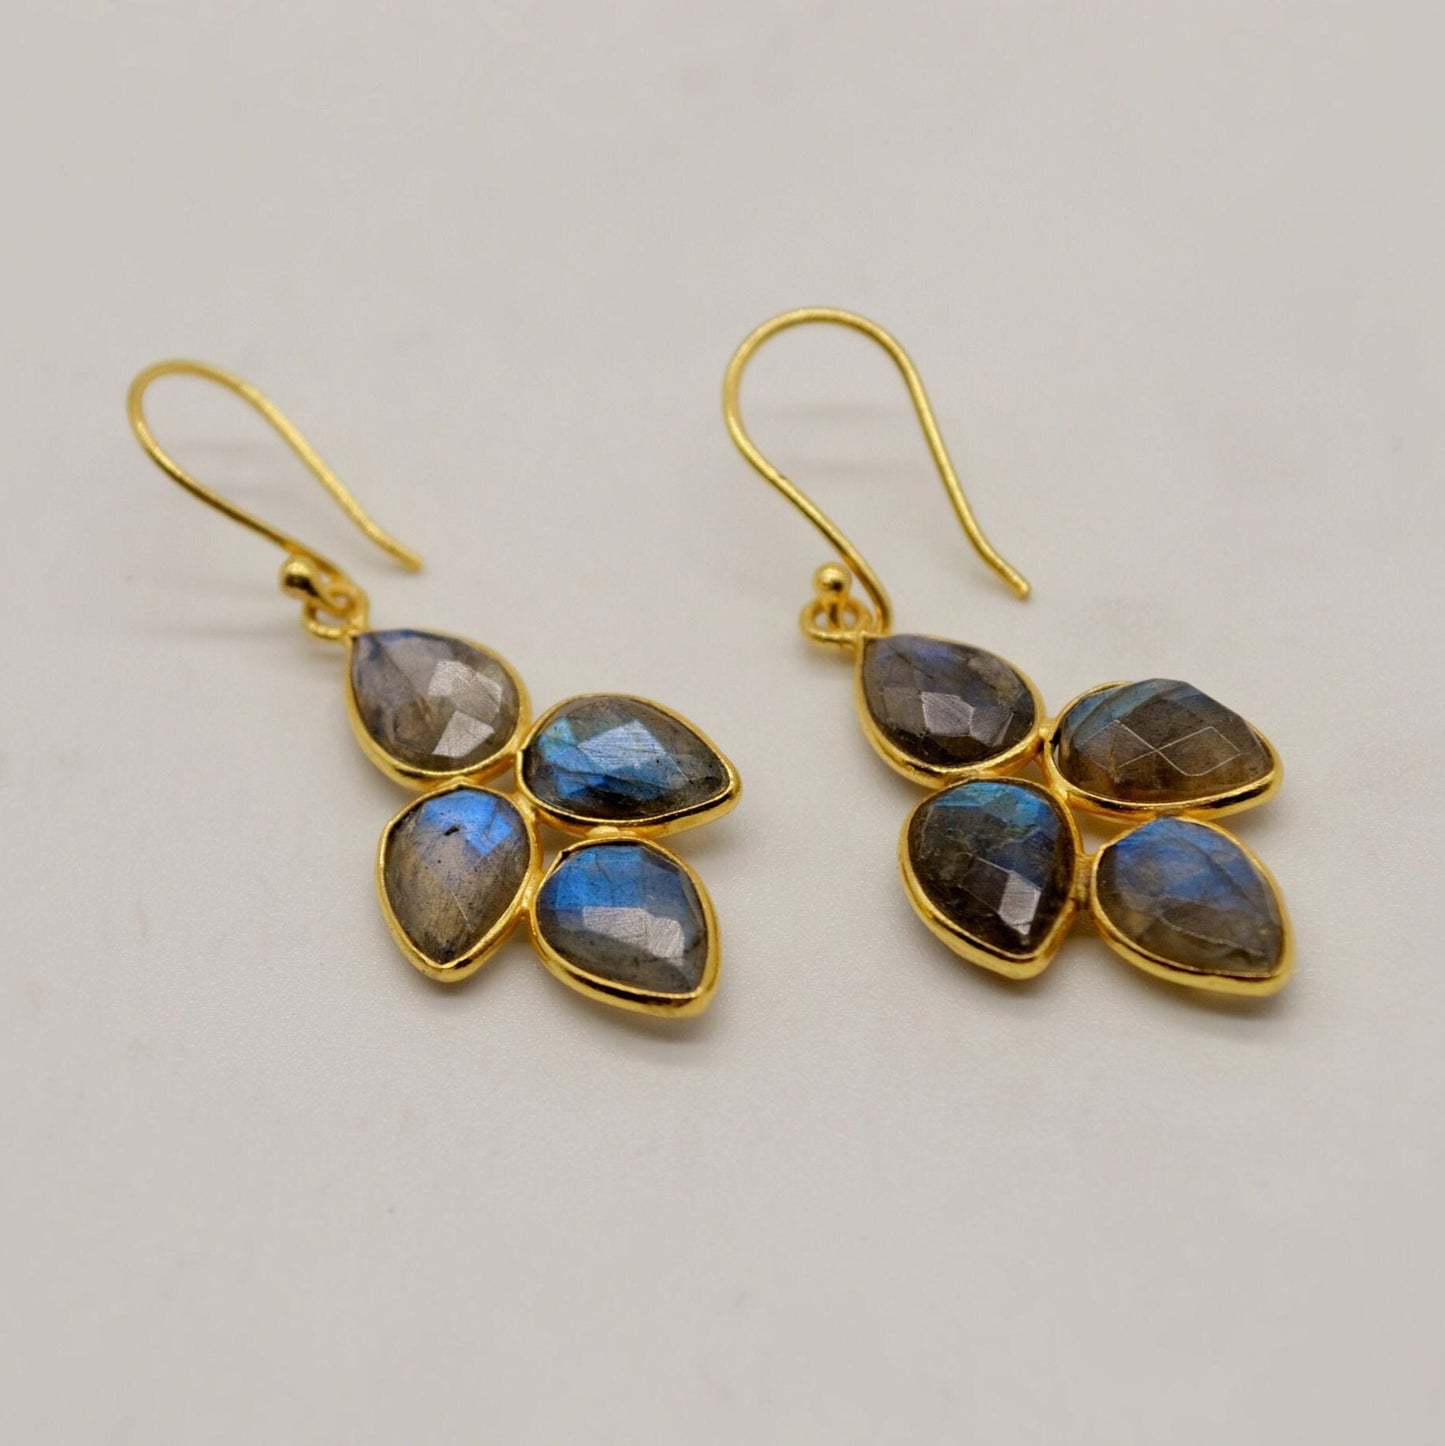 Handmade Labradorite Earrings - Sterling Silver & Gold, Sparkling Gemstone Dangles, Stylish Gift Idea